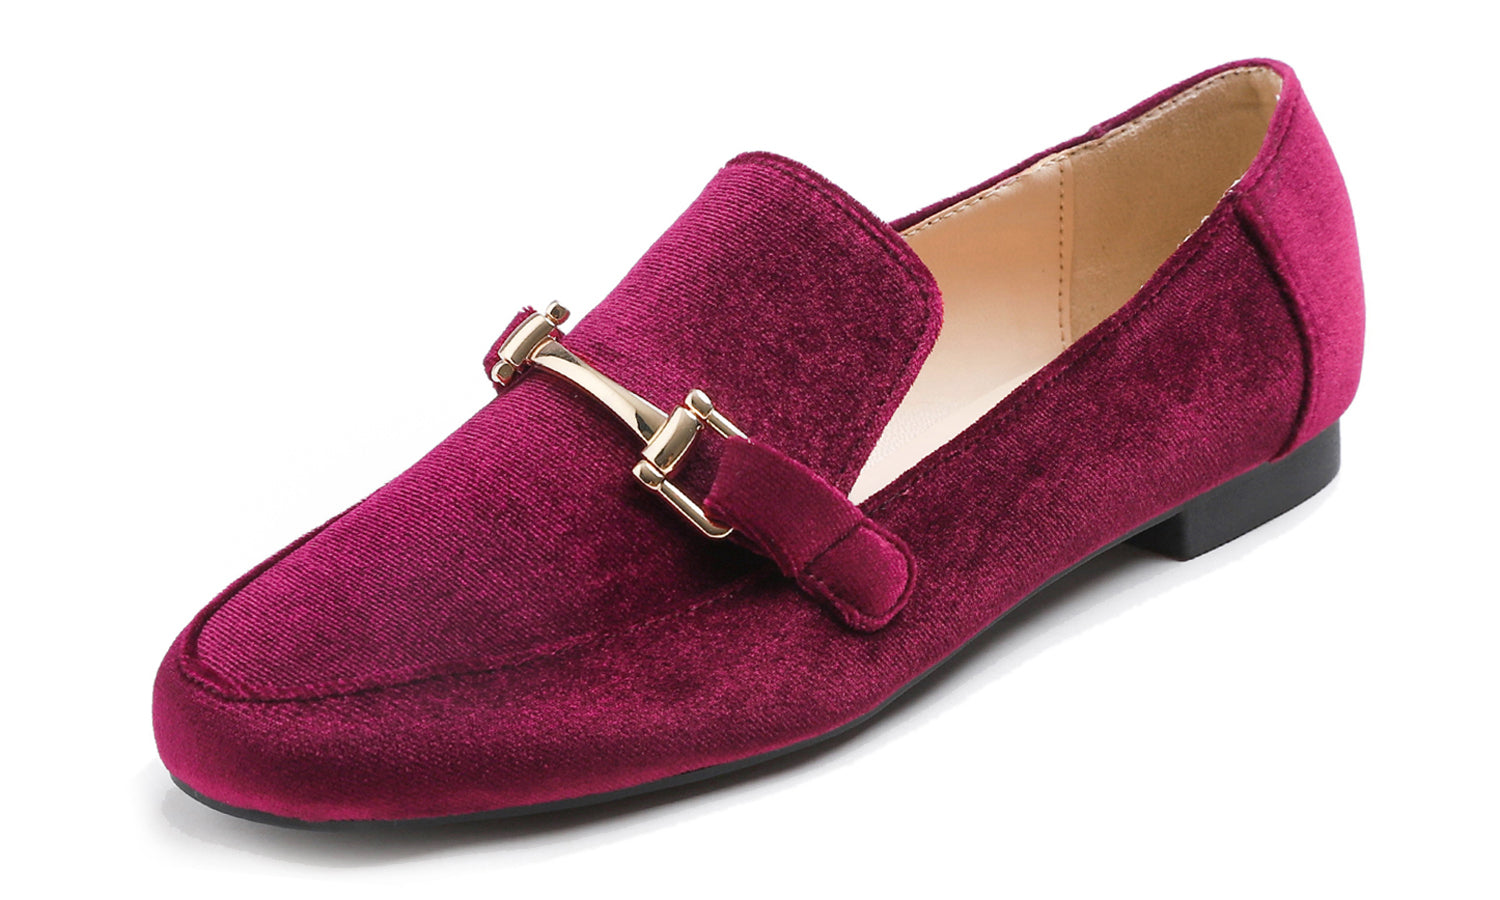 Feversole Women's Fashion Trim Deco Loafer Flats Burgundy Red Velvet